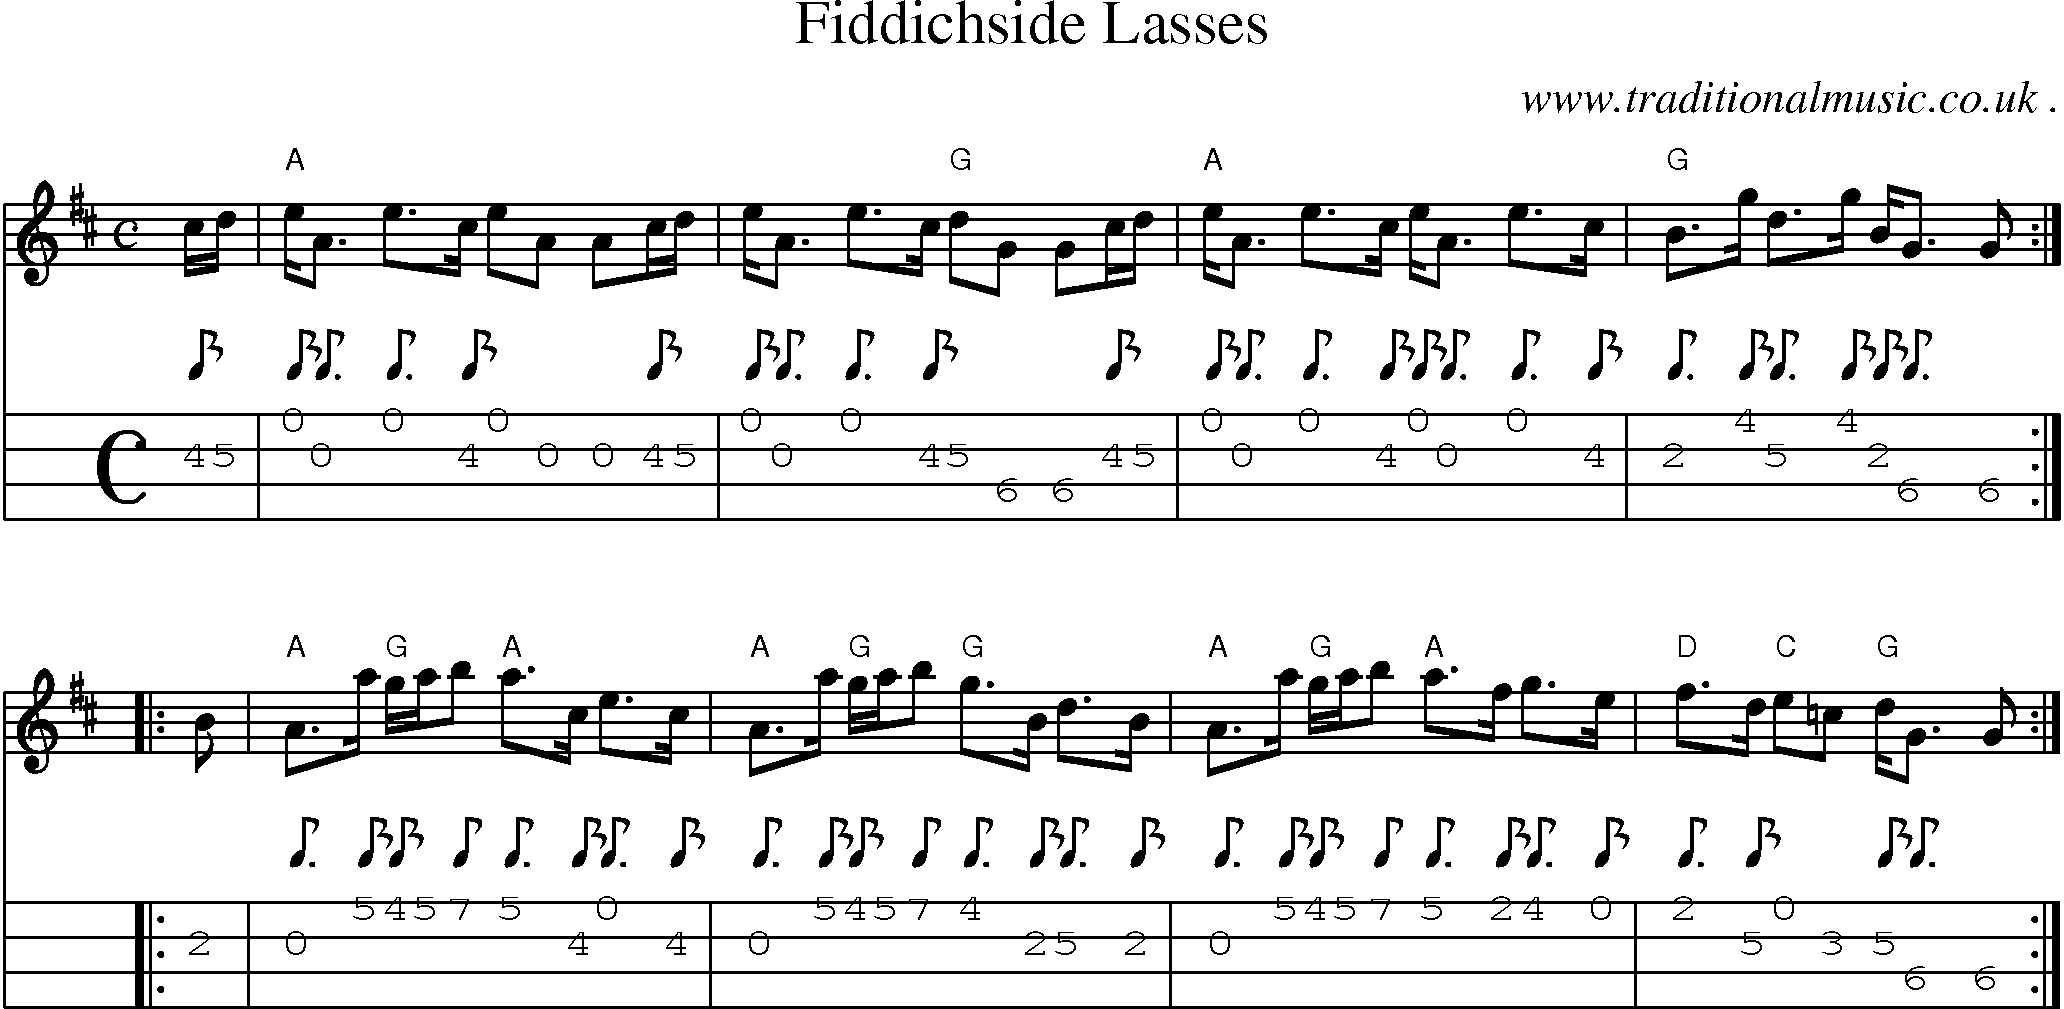 Sheet-music  score, Chords and Mandolin Tabs for Fiddichside Lasses